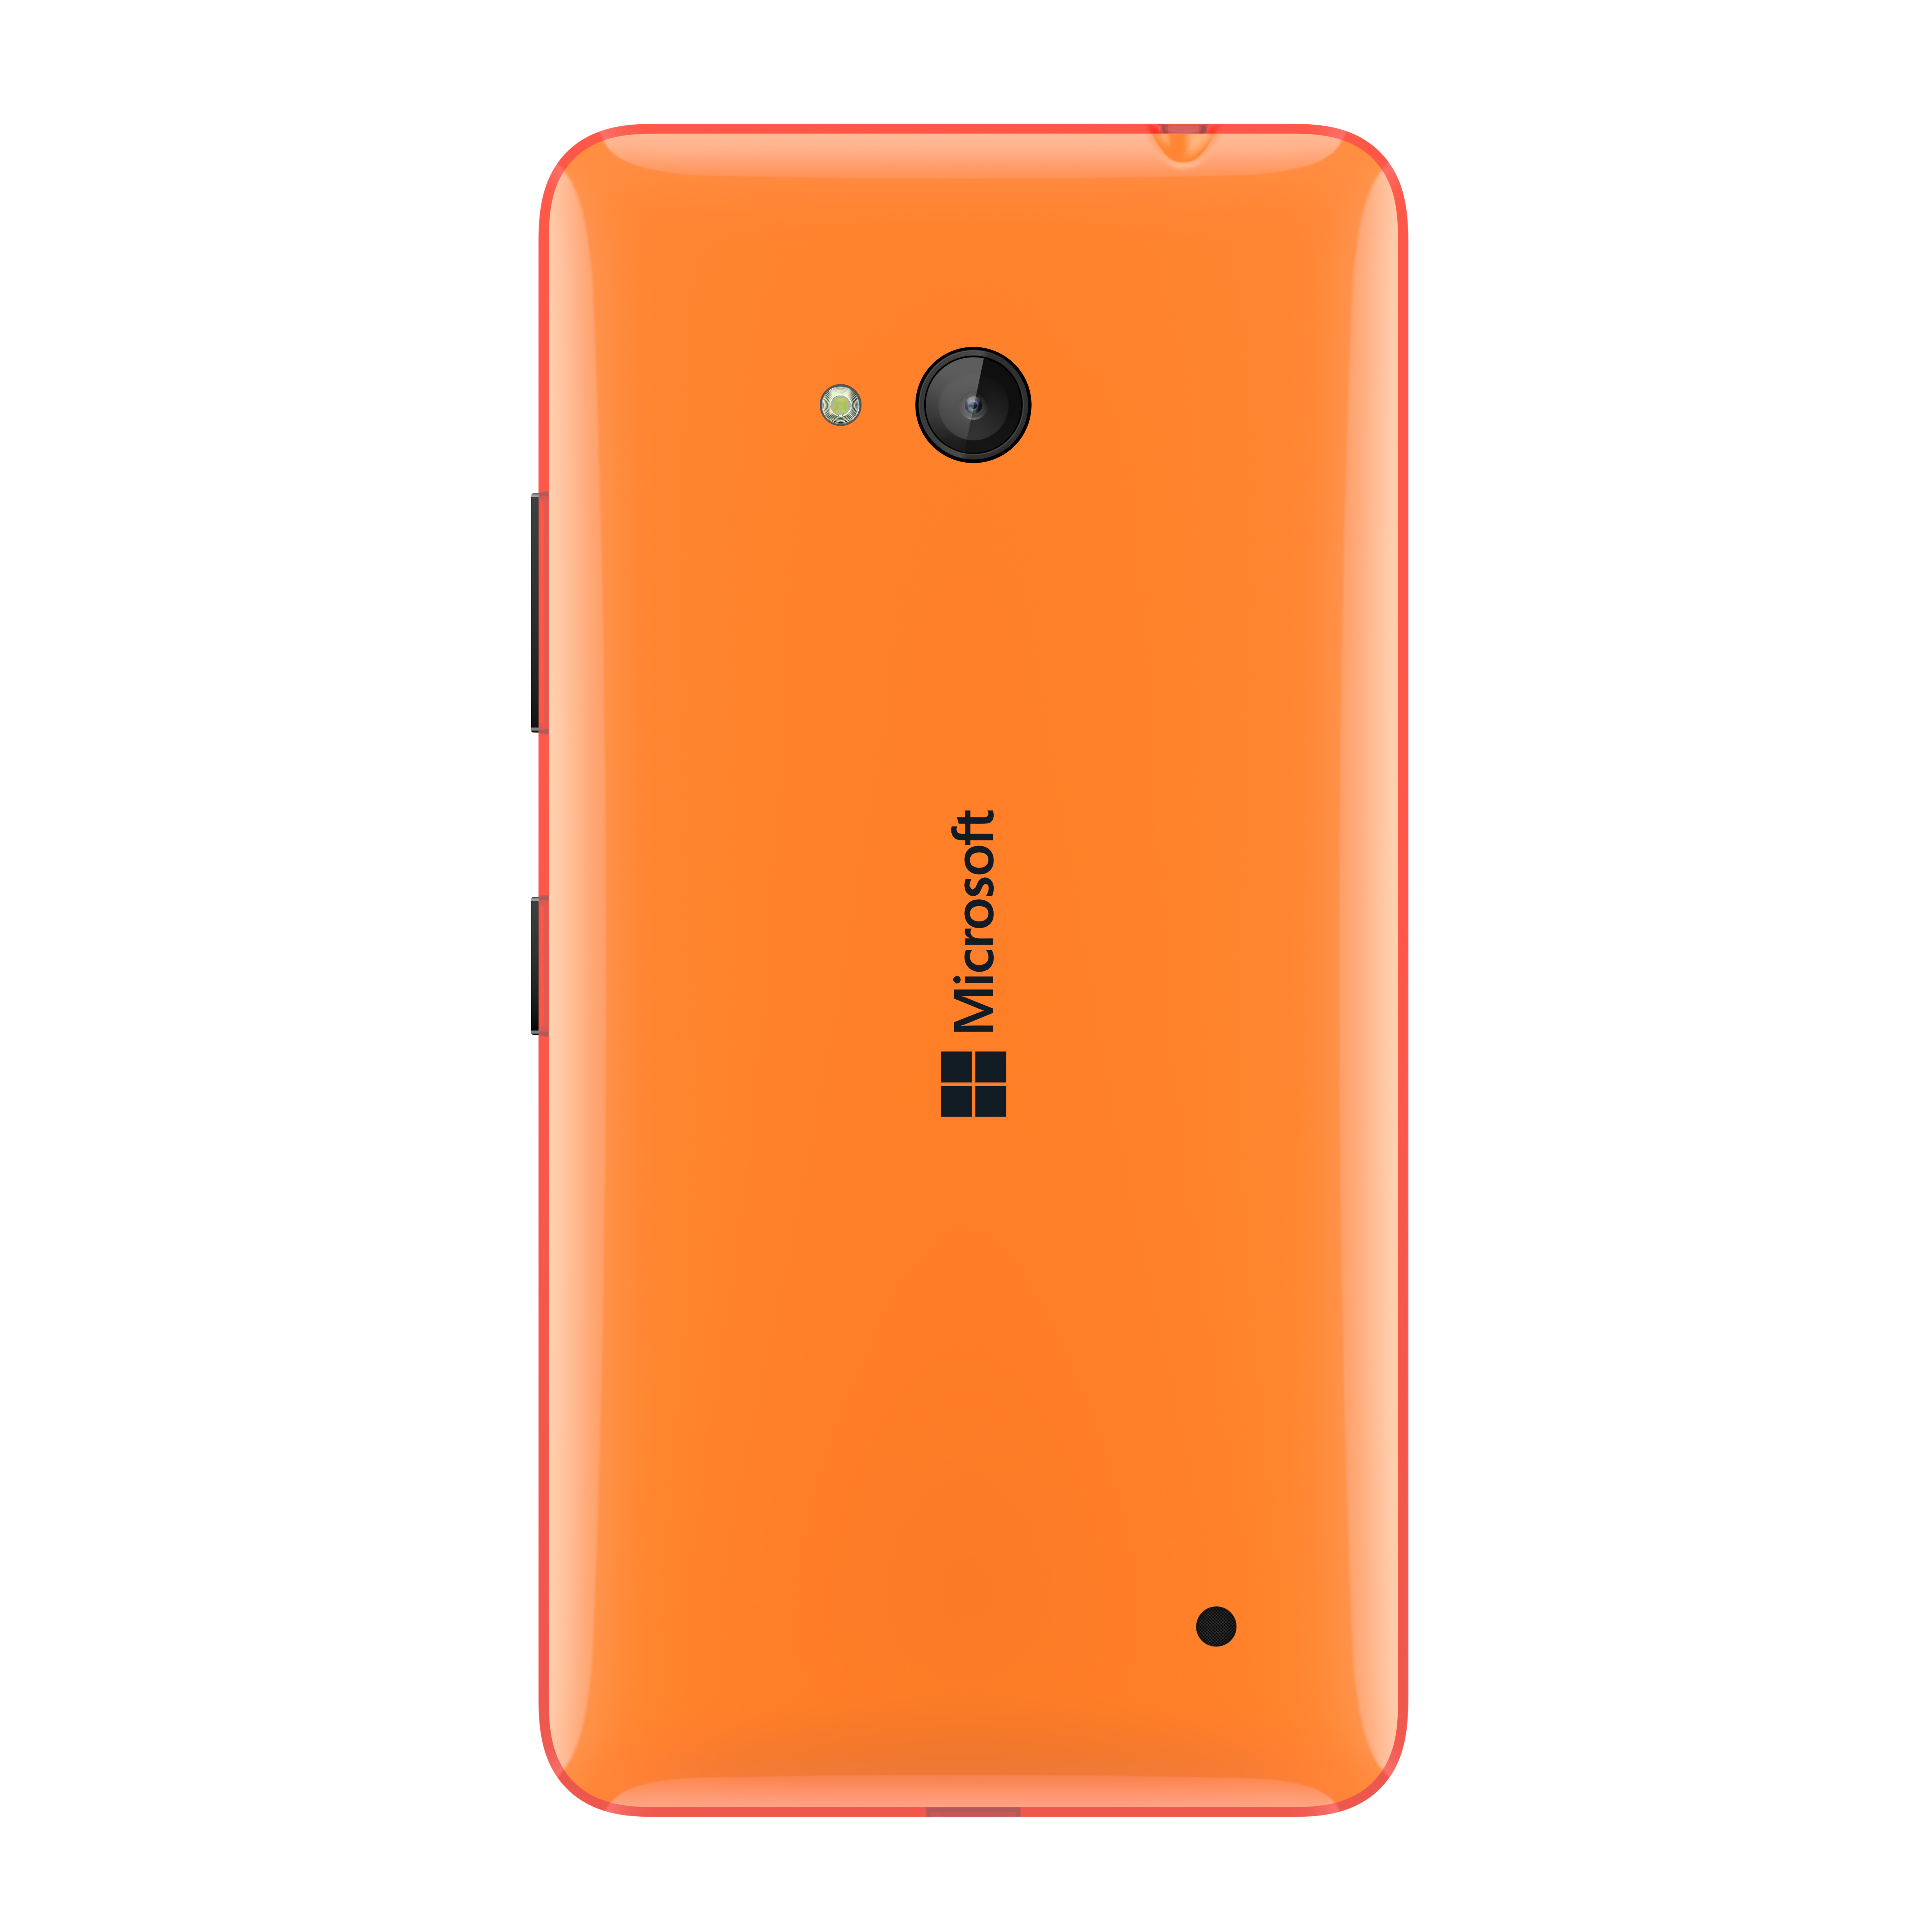 Черный телефон оранжевая. Смартфон Microsoft Lumia 640 XL LTE Dual SIM. Смартфон Nokia Lumia 730 Dual SIM. Nokia x2 Dual. Nokia Lumia 535.